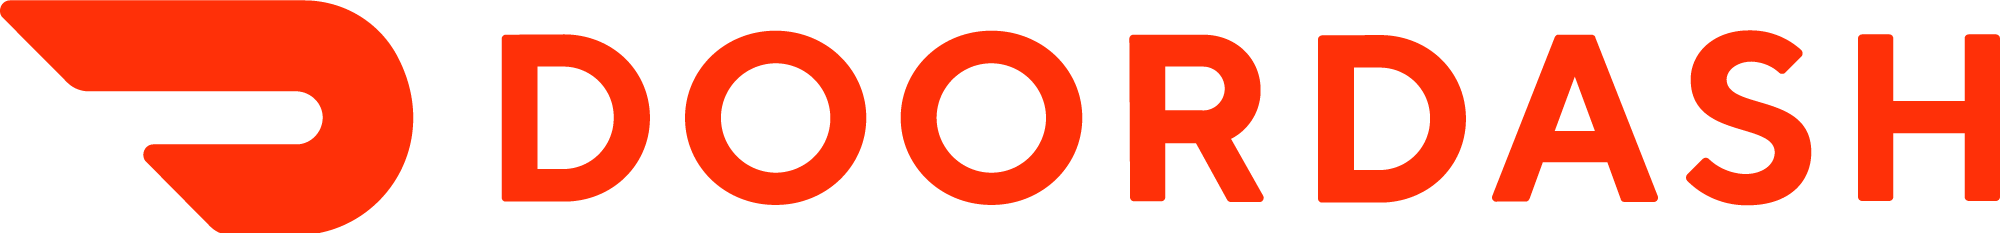 Doordash Logo With Text